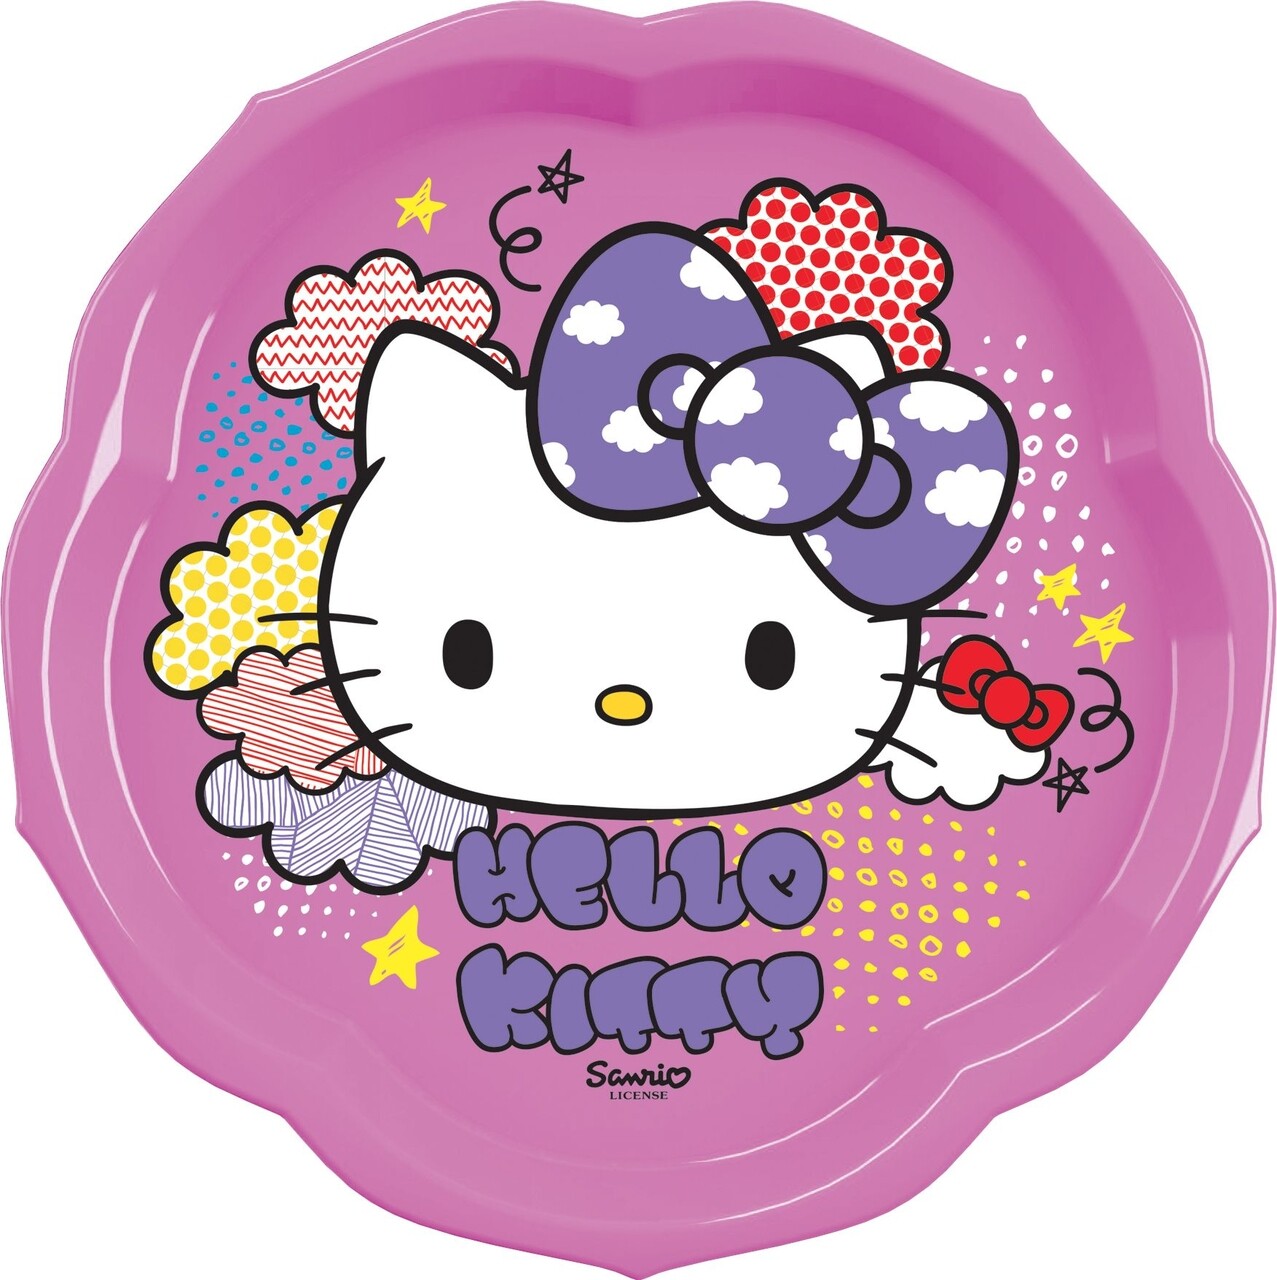 Farfurie Intinsa Hello Kitty, Sanrio, 23 Cm, Plastic, Mov